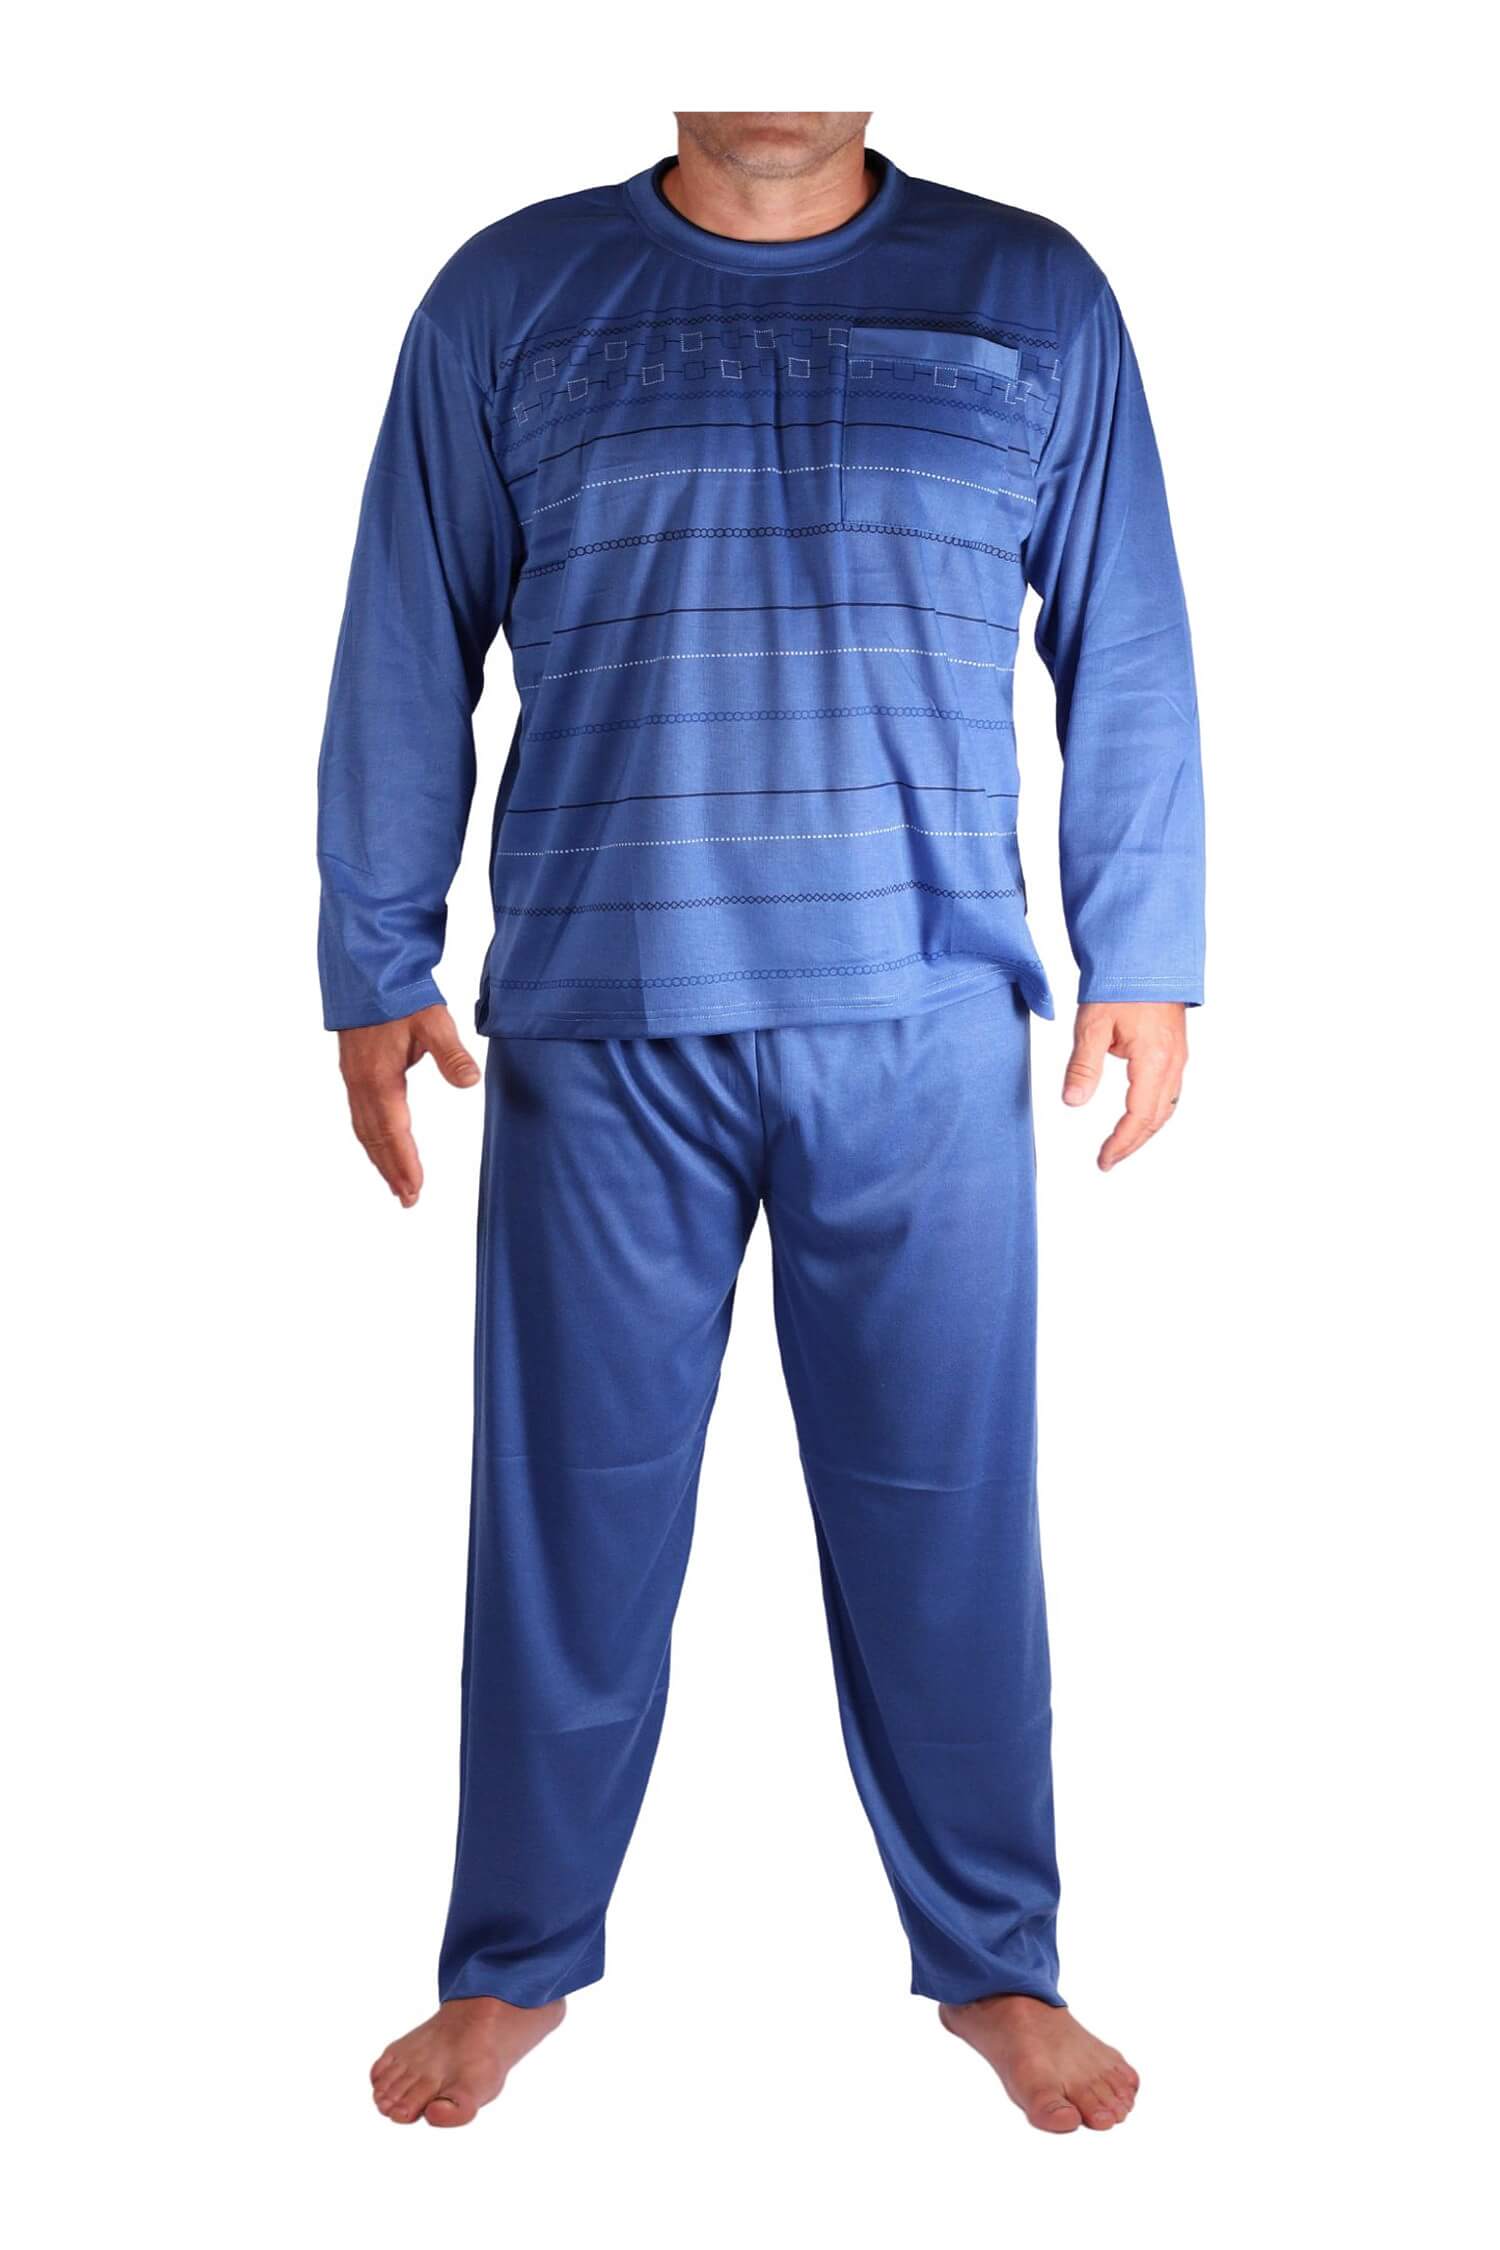 Milan pyžamo pánské dlouhé V1611 modrá XL